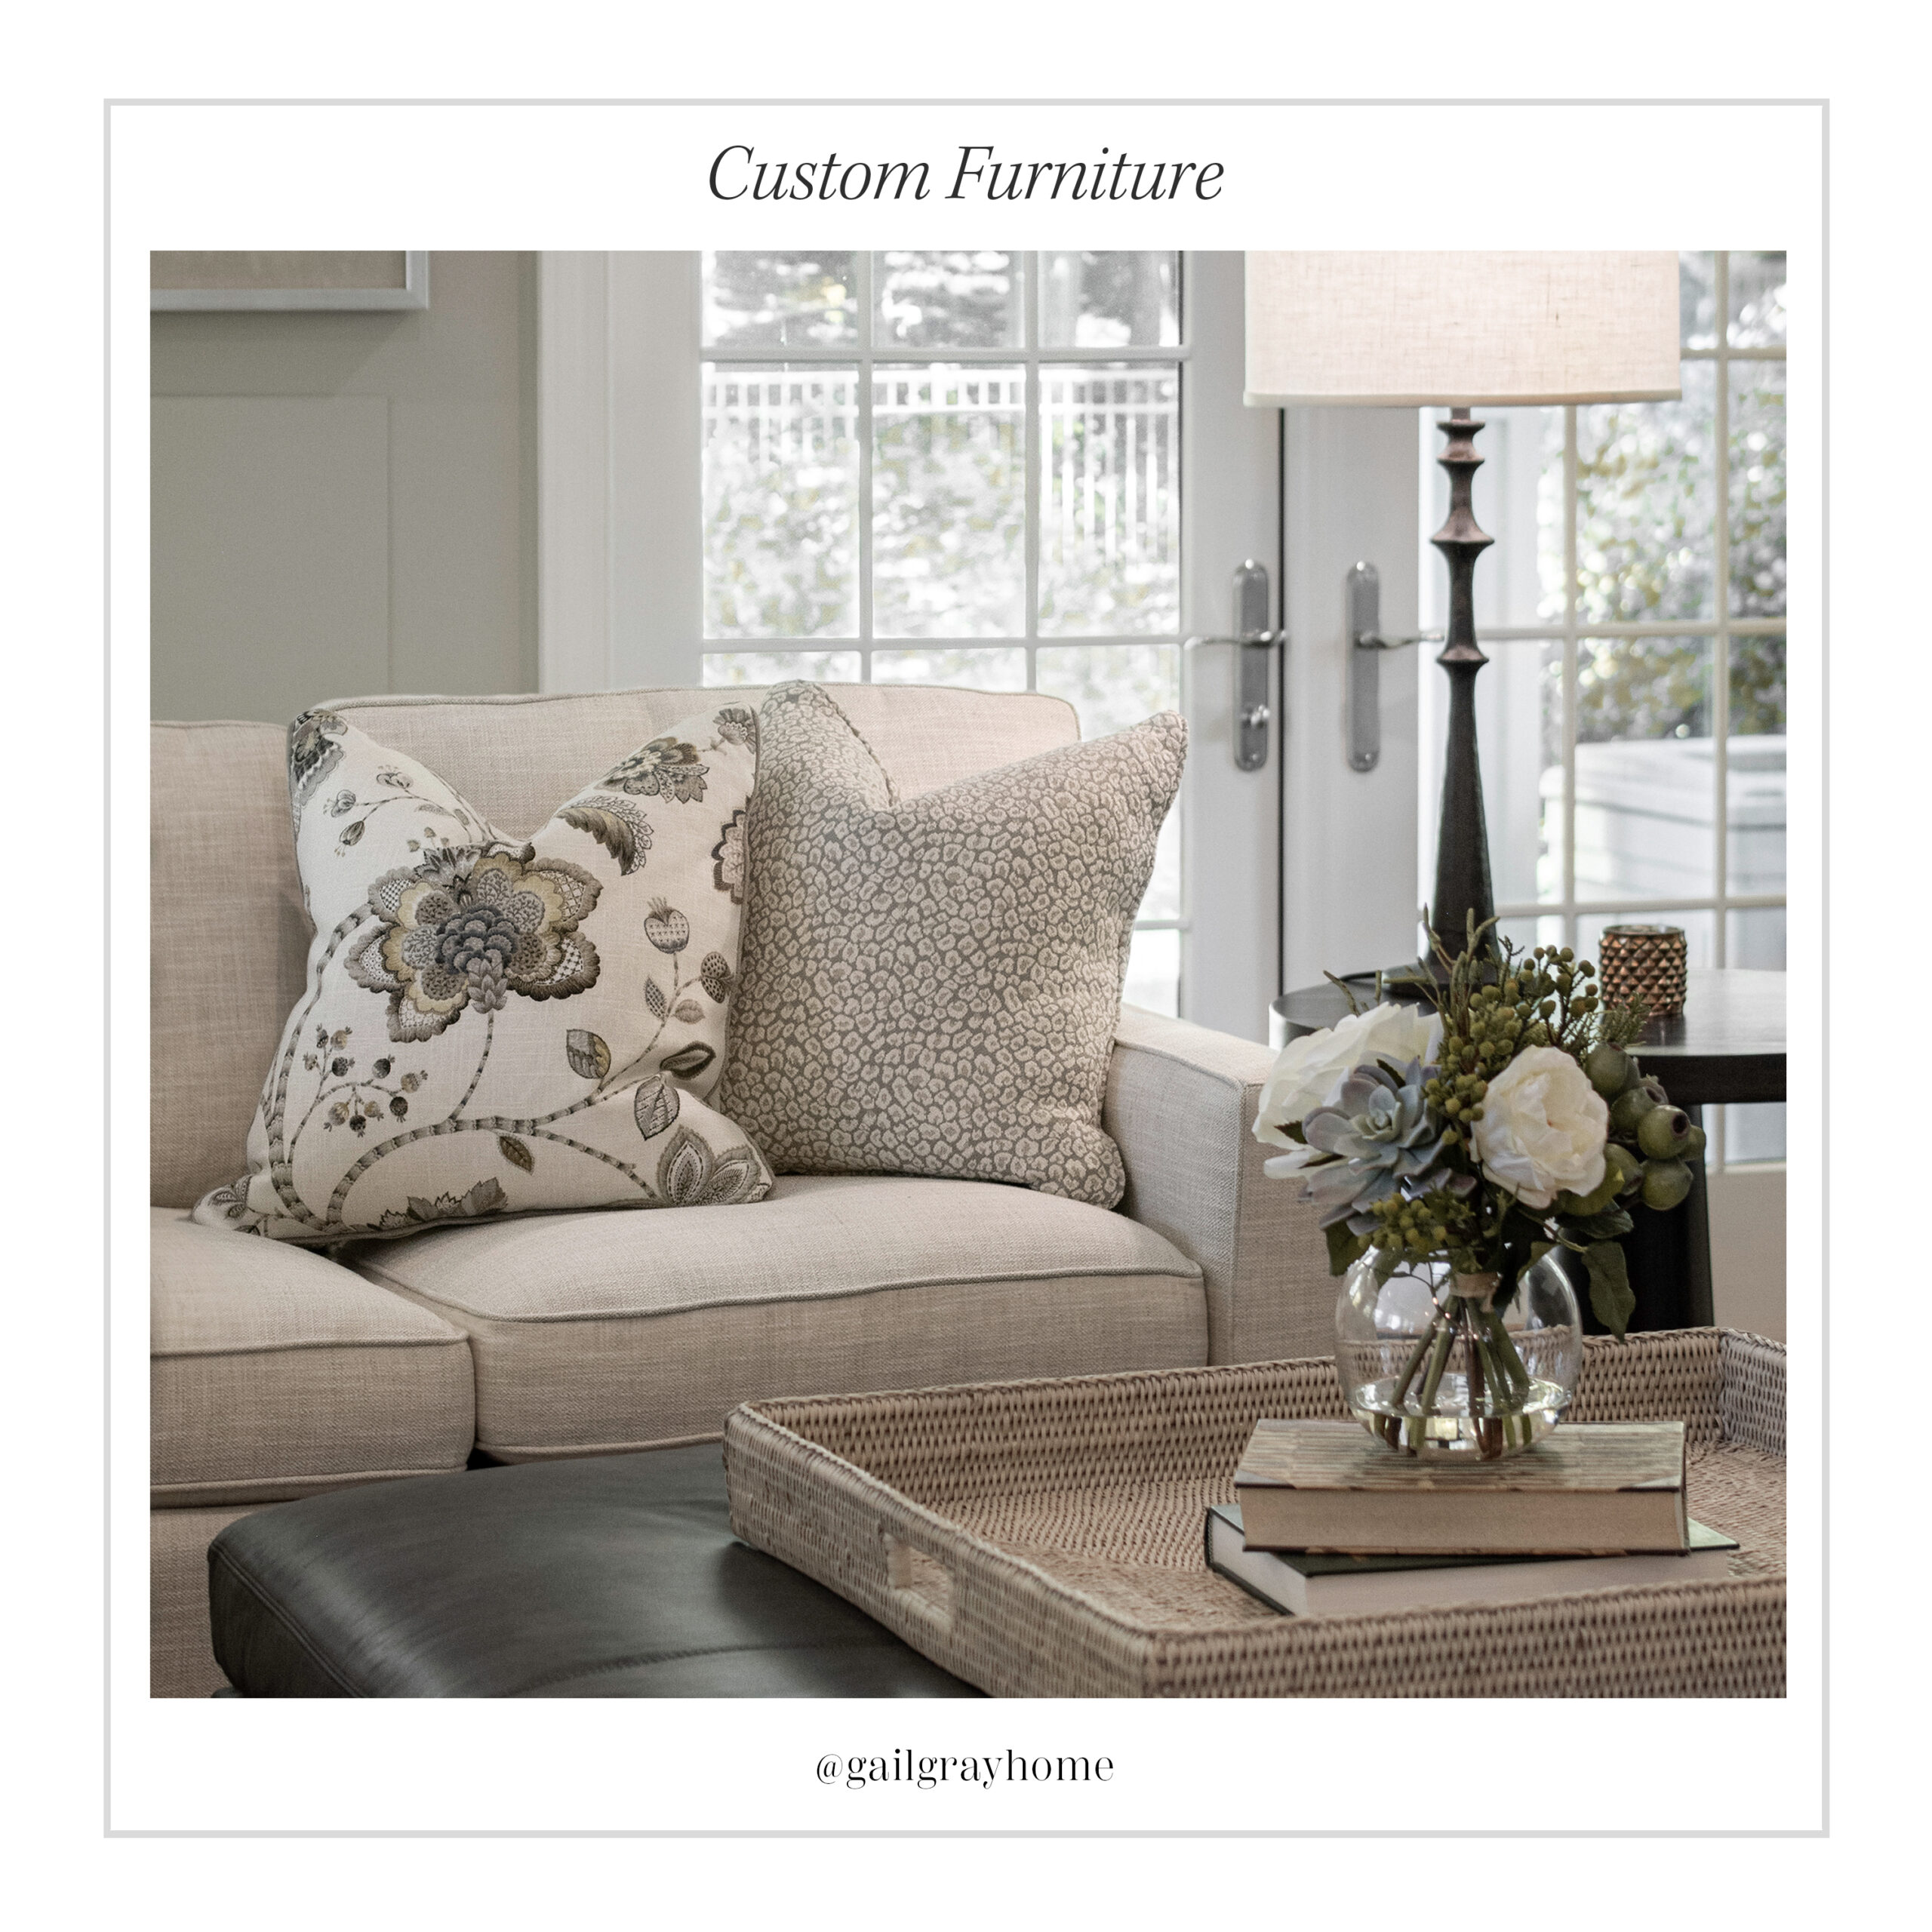 Custom Furniture Design Services at GailGray Home